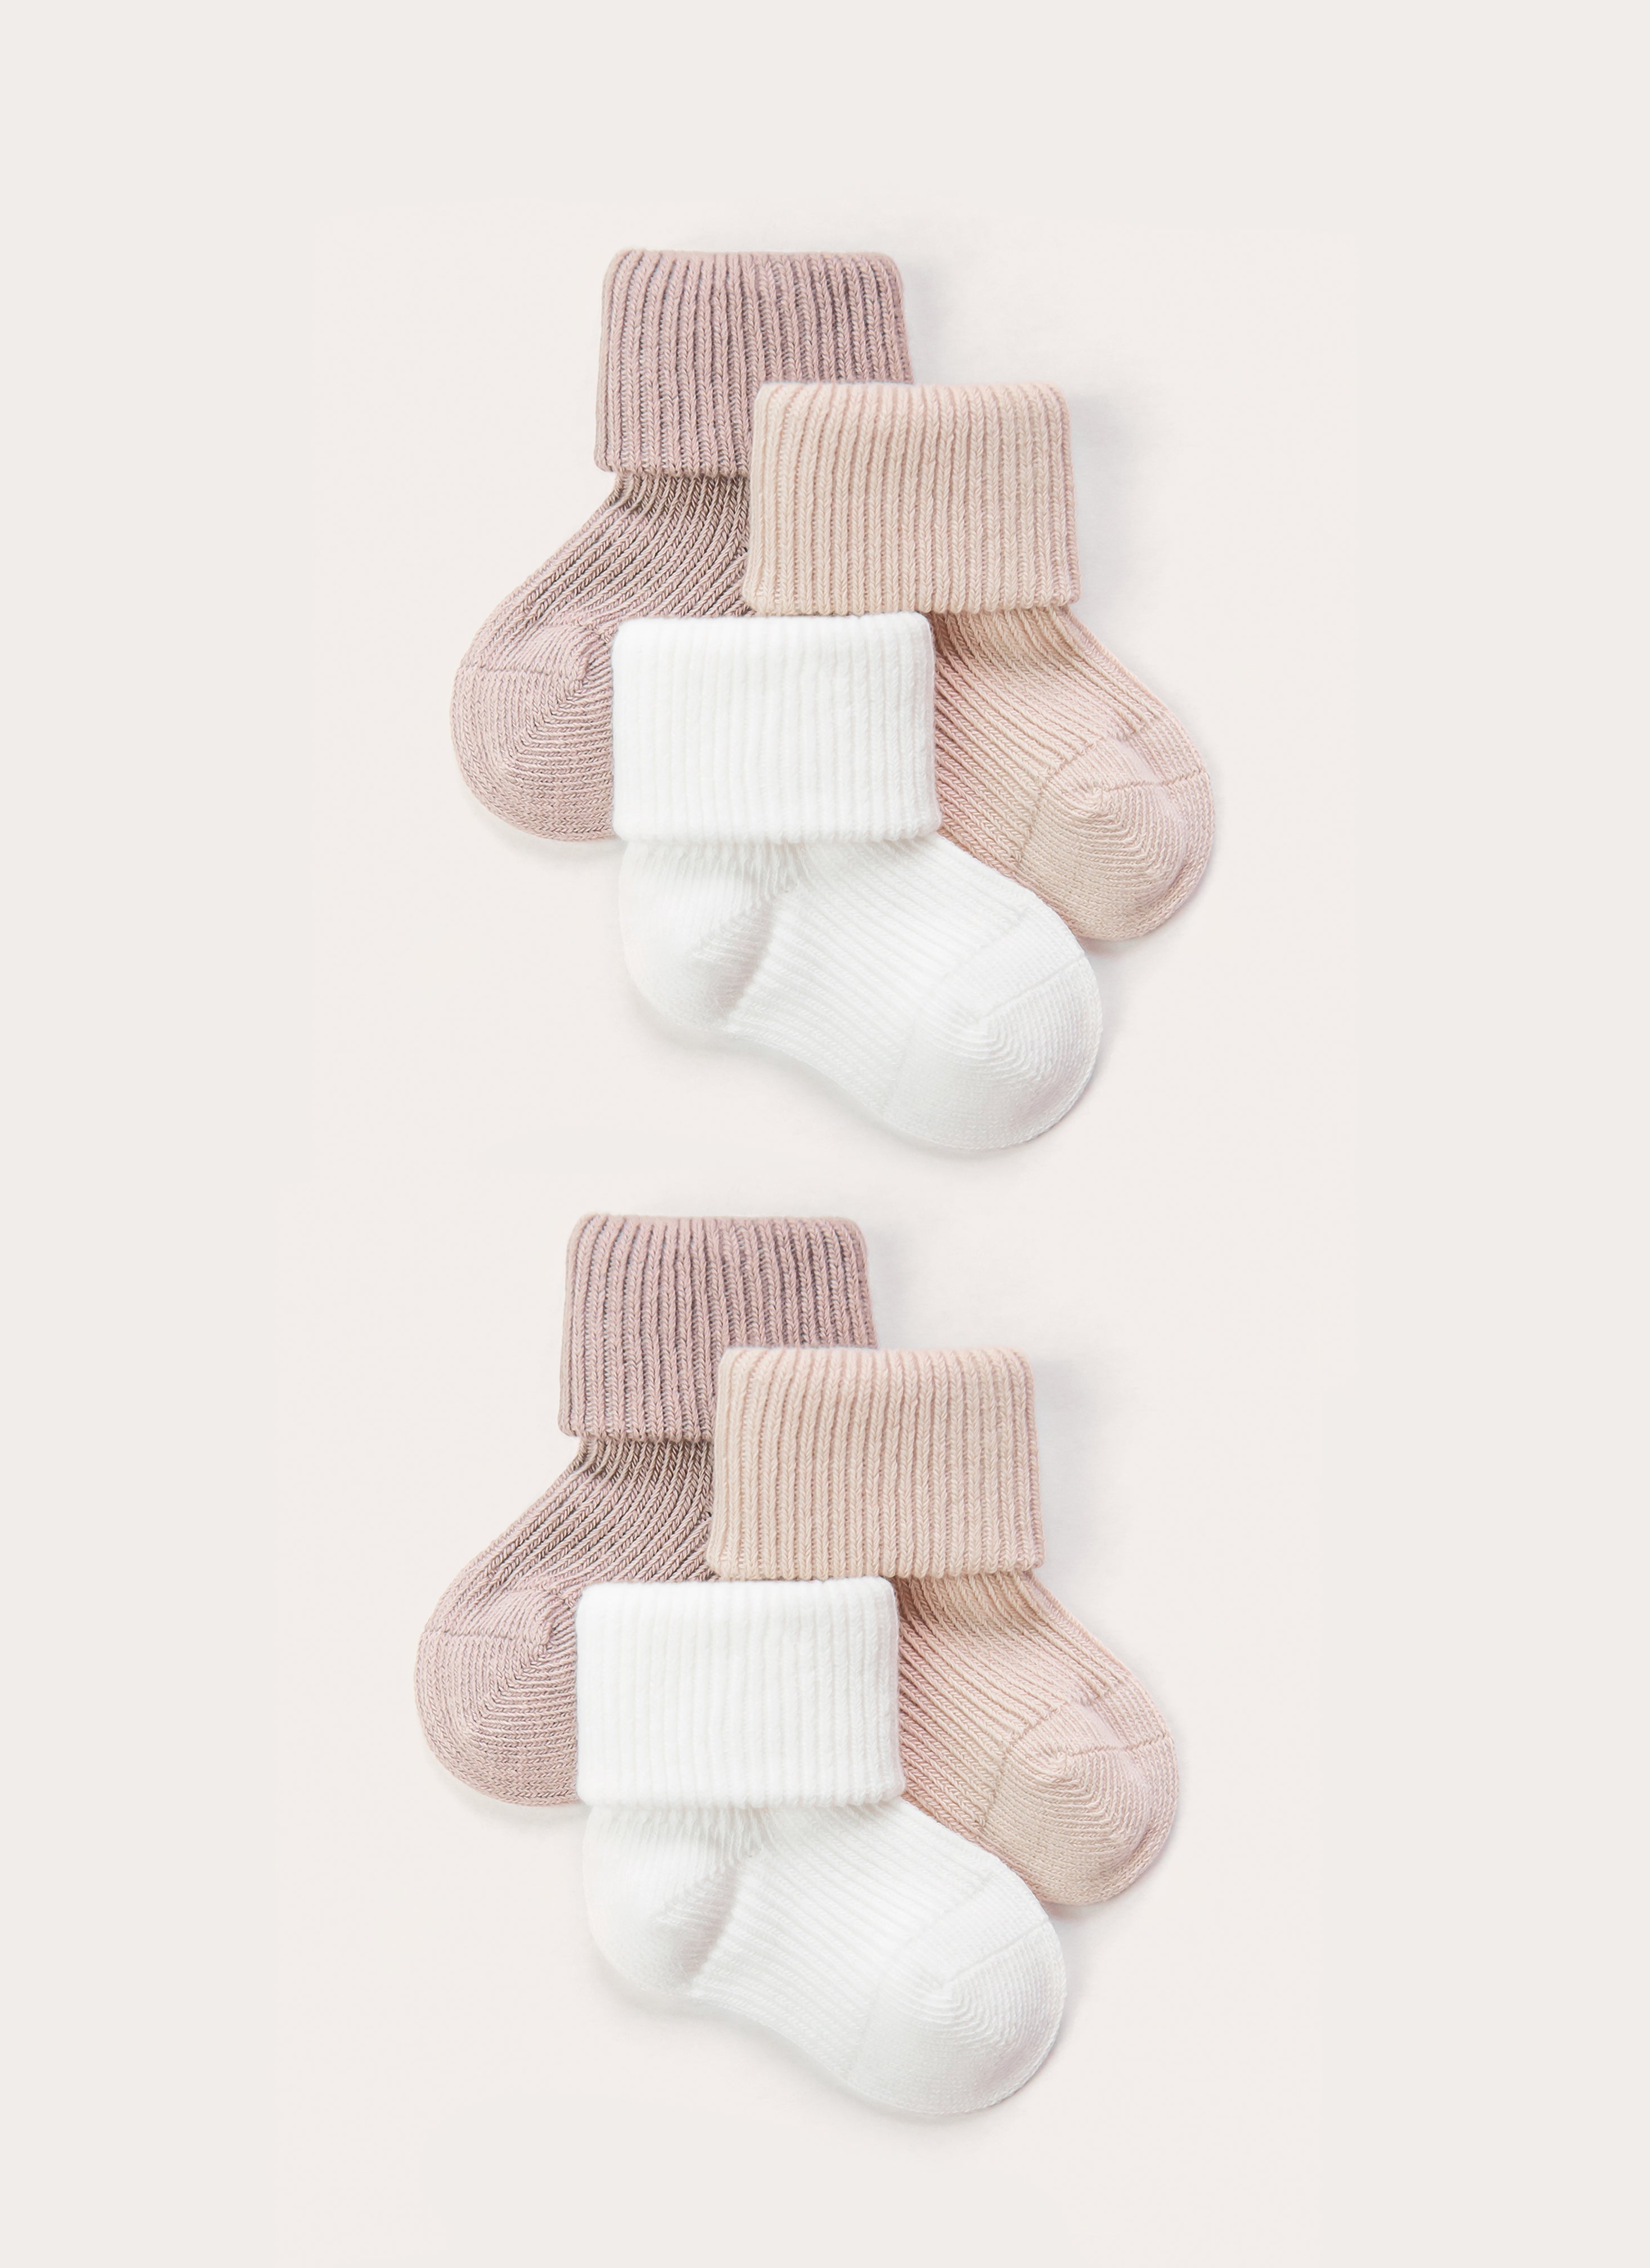 Soft Cotton Socks 6PC/Set (Brown, Nude, White)